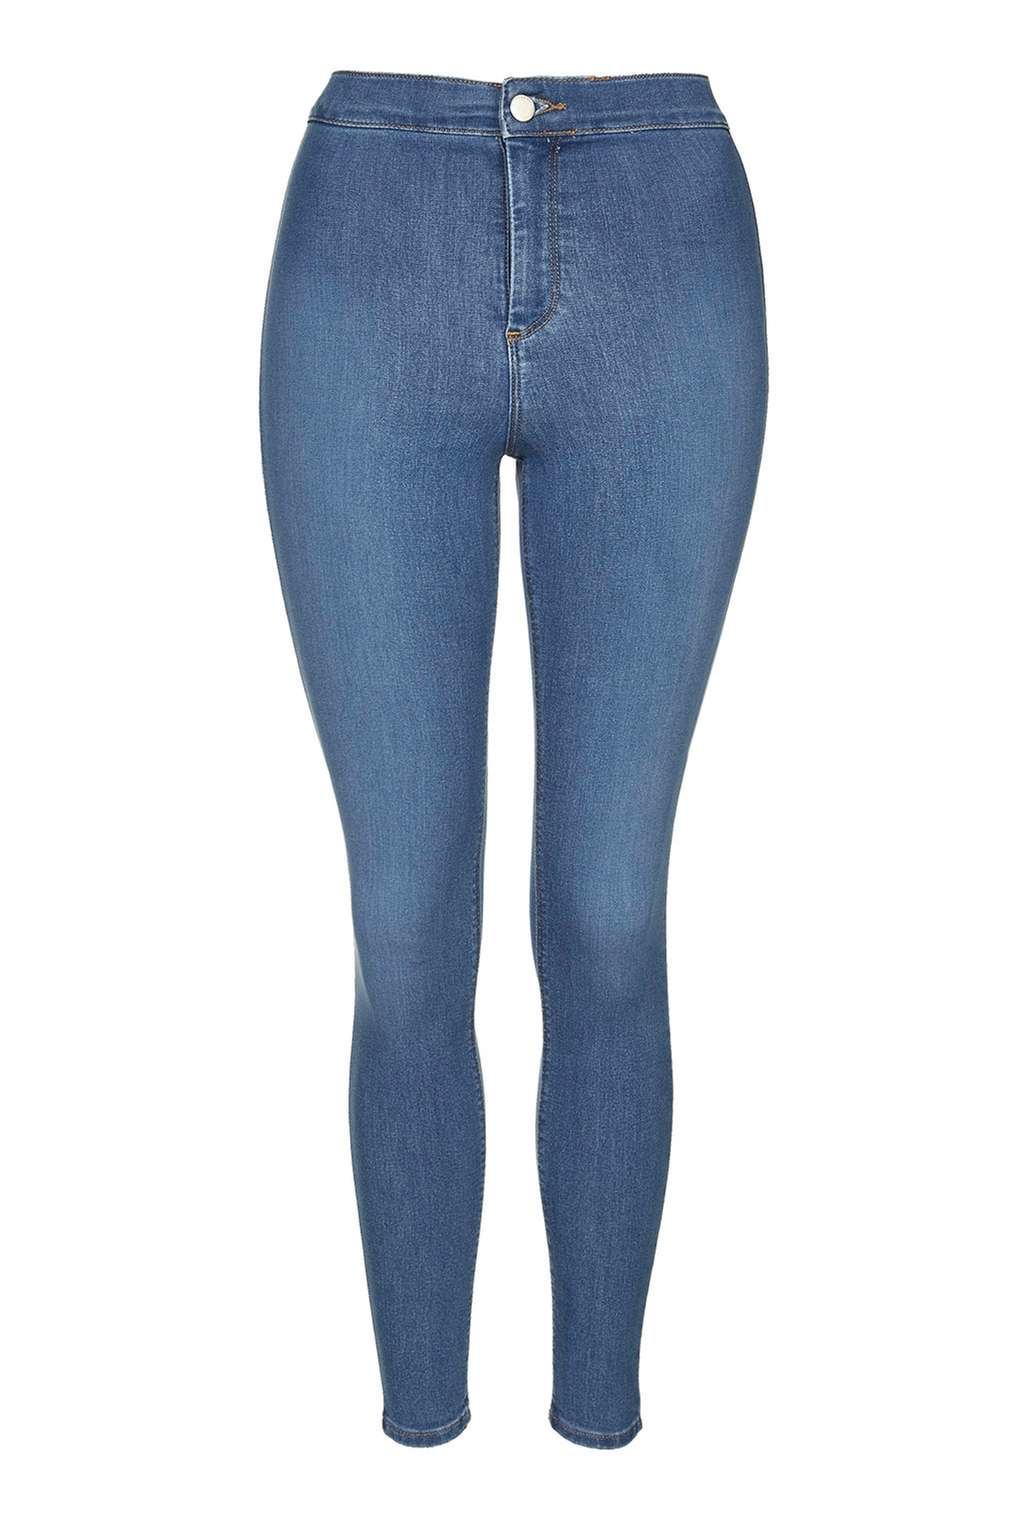 Topshop Petite Blue Joni Jeans in Blue | Lyst